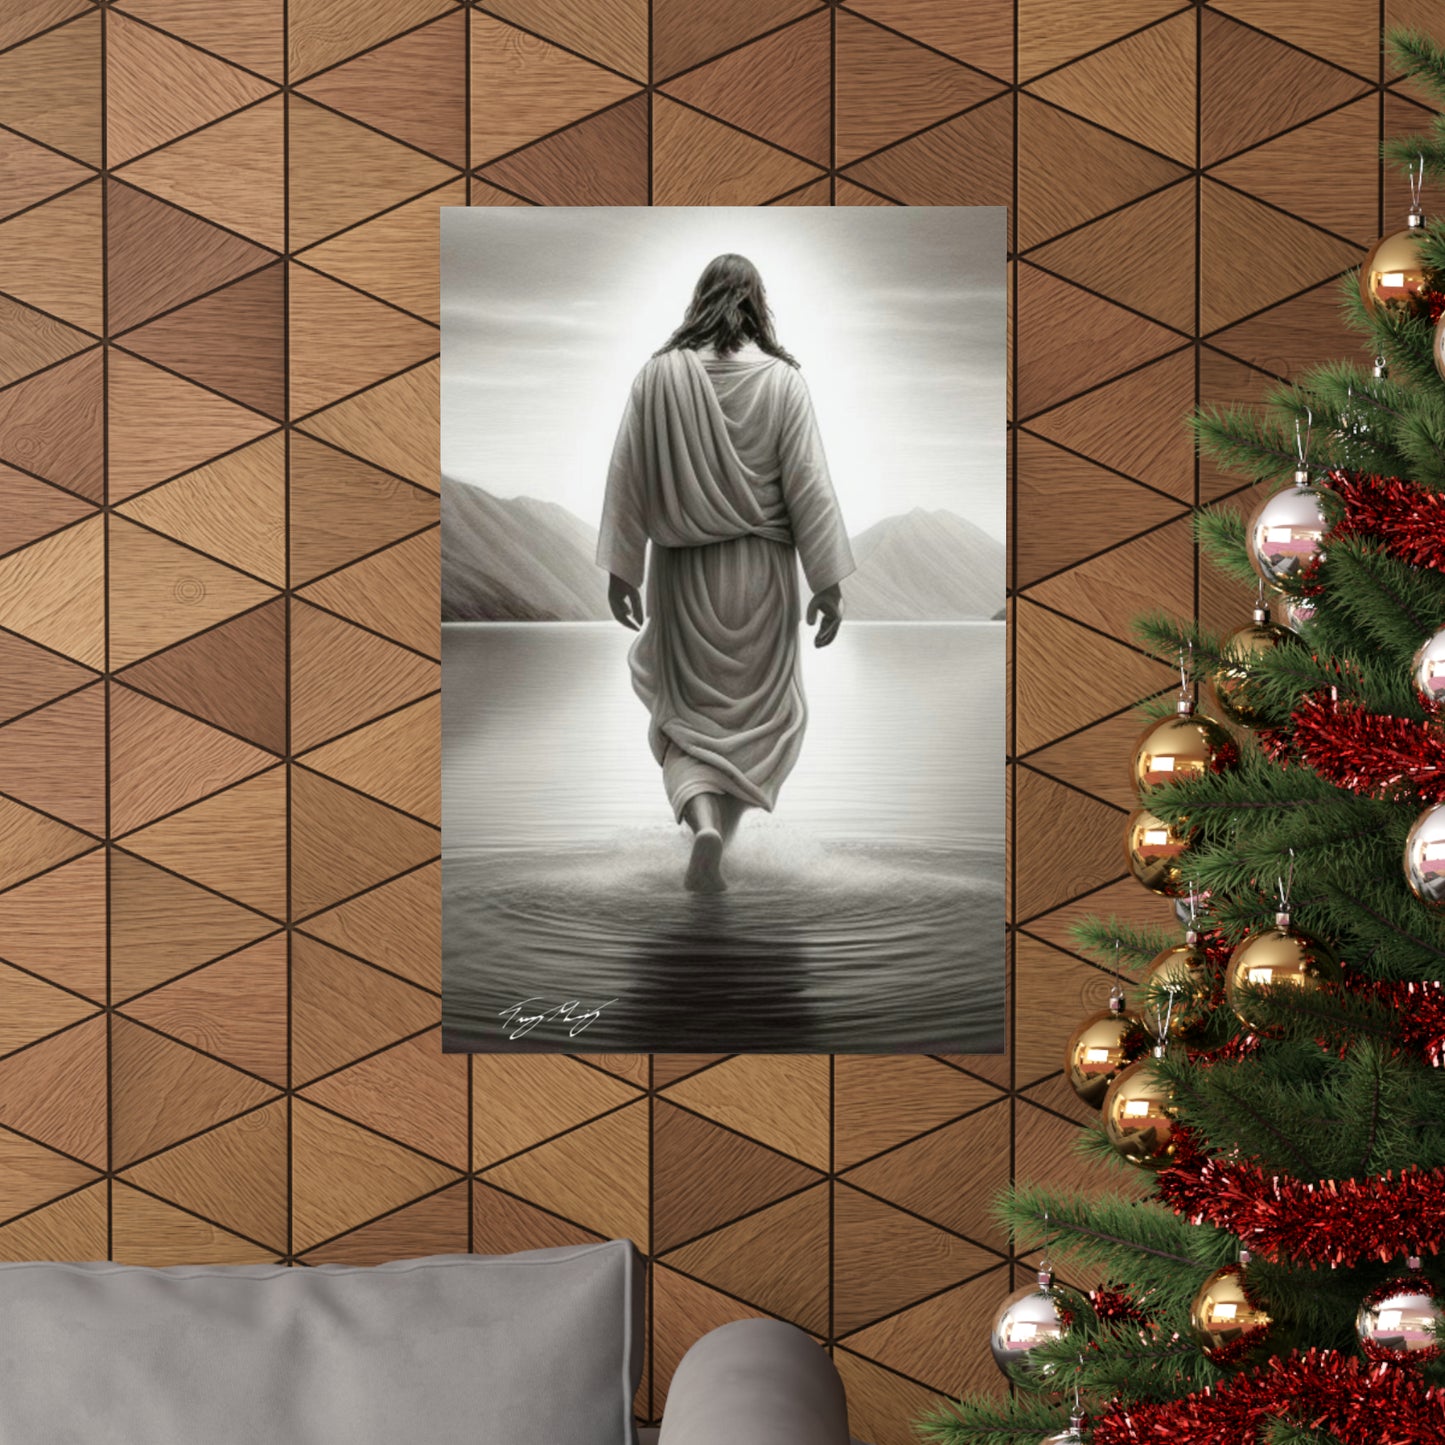 Jesus Walks on Water - Poster Print